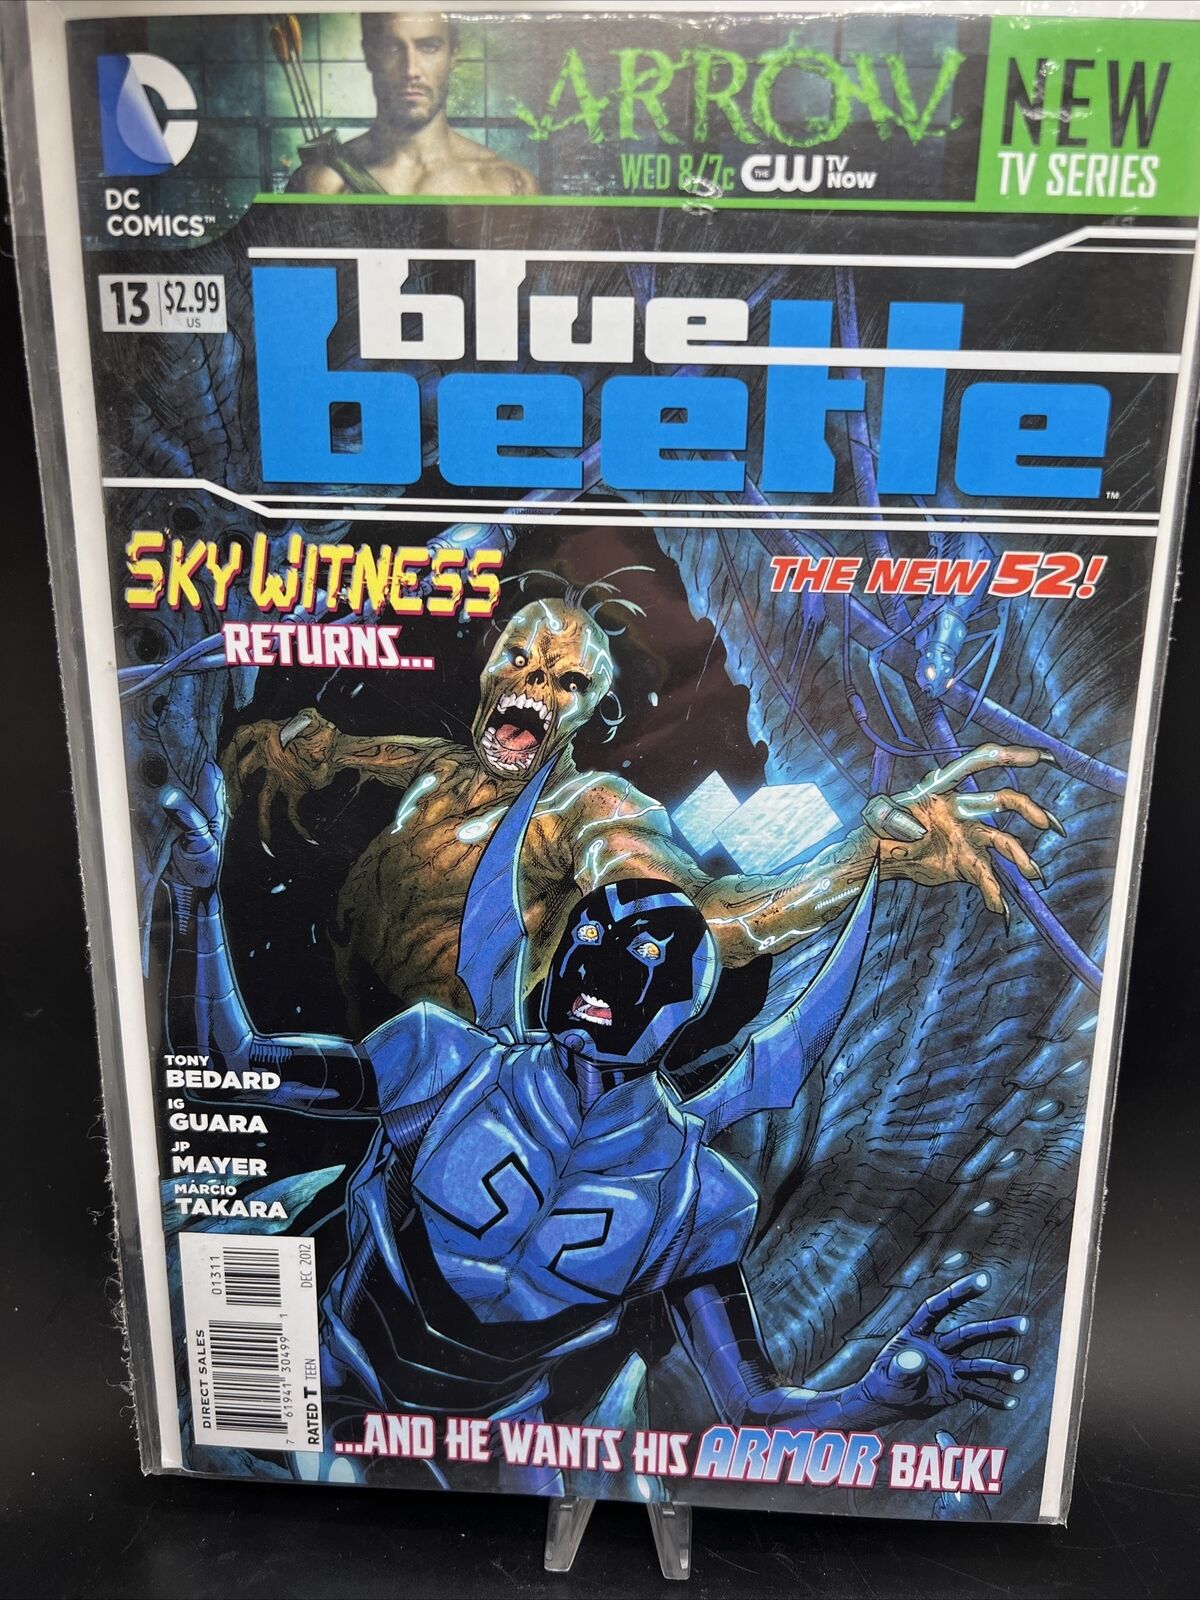 The New 52 Blue Beetle #13 - December 2012 Sky Witness Returns